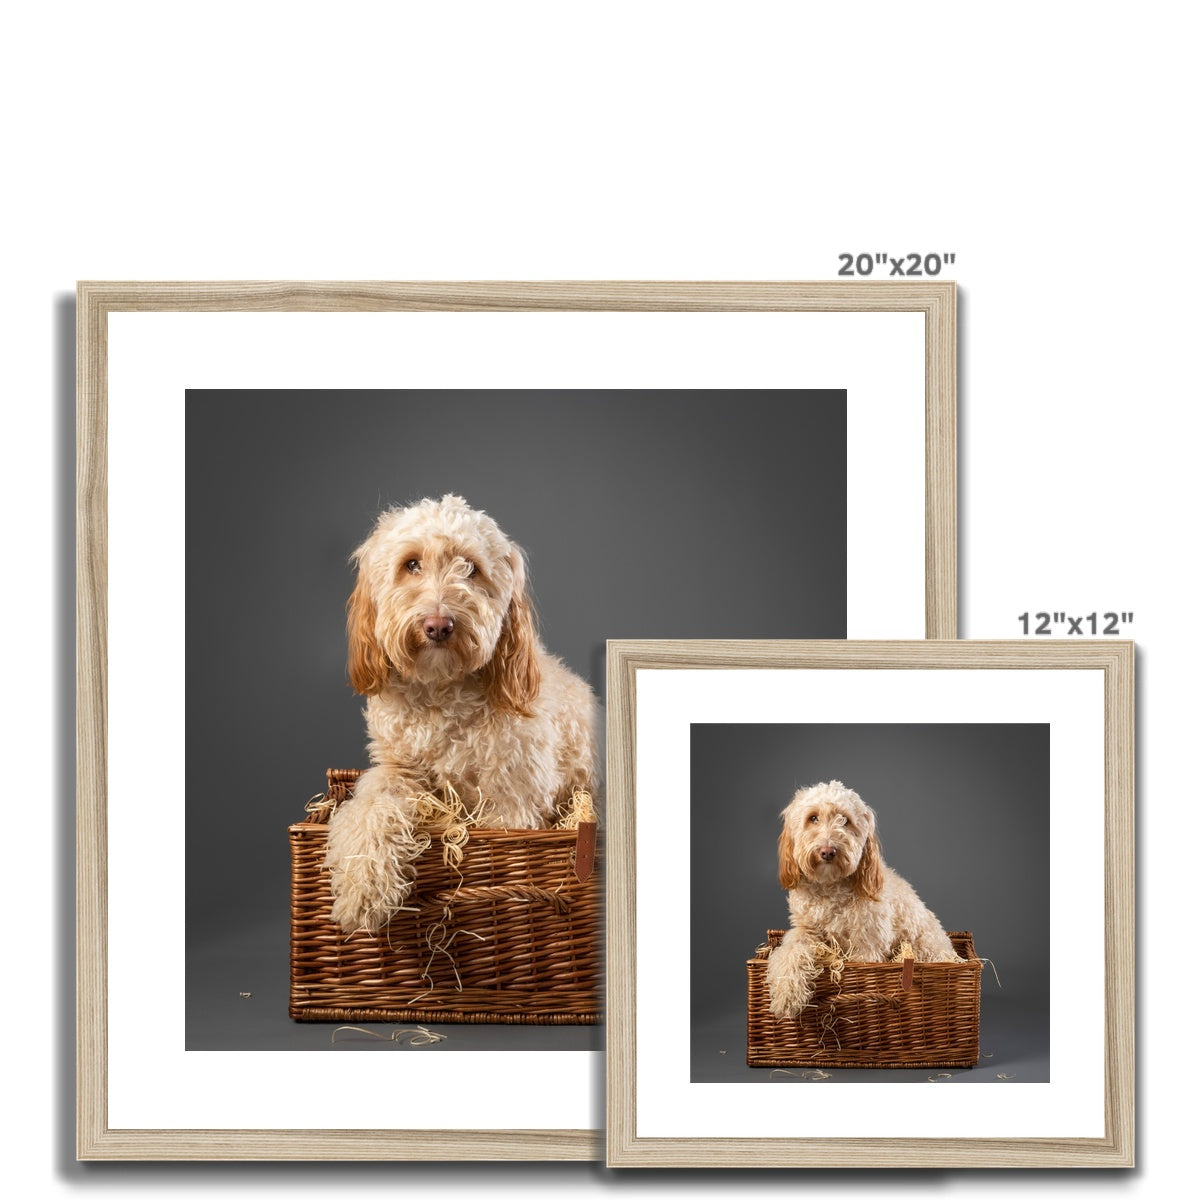 Cockapoo dog inside wicker picnic hamper Framed & Mounted Print